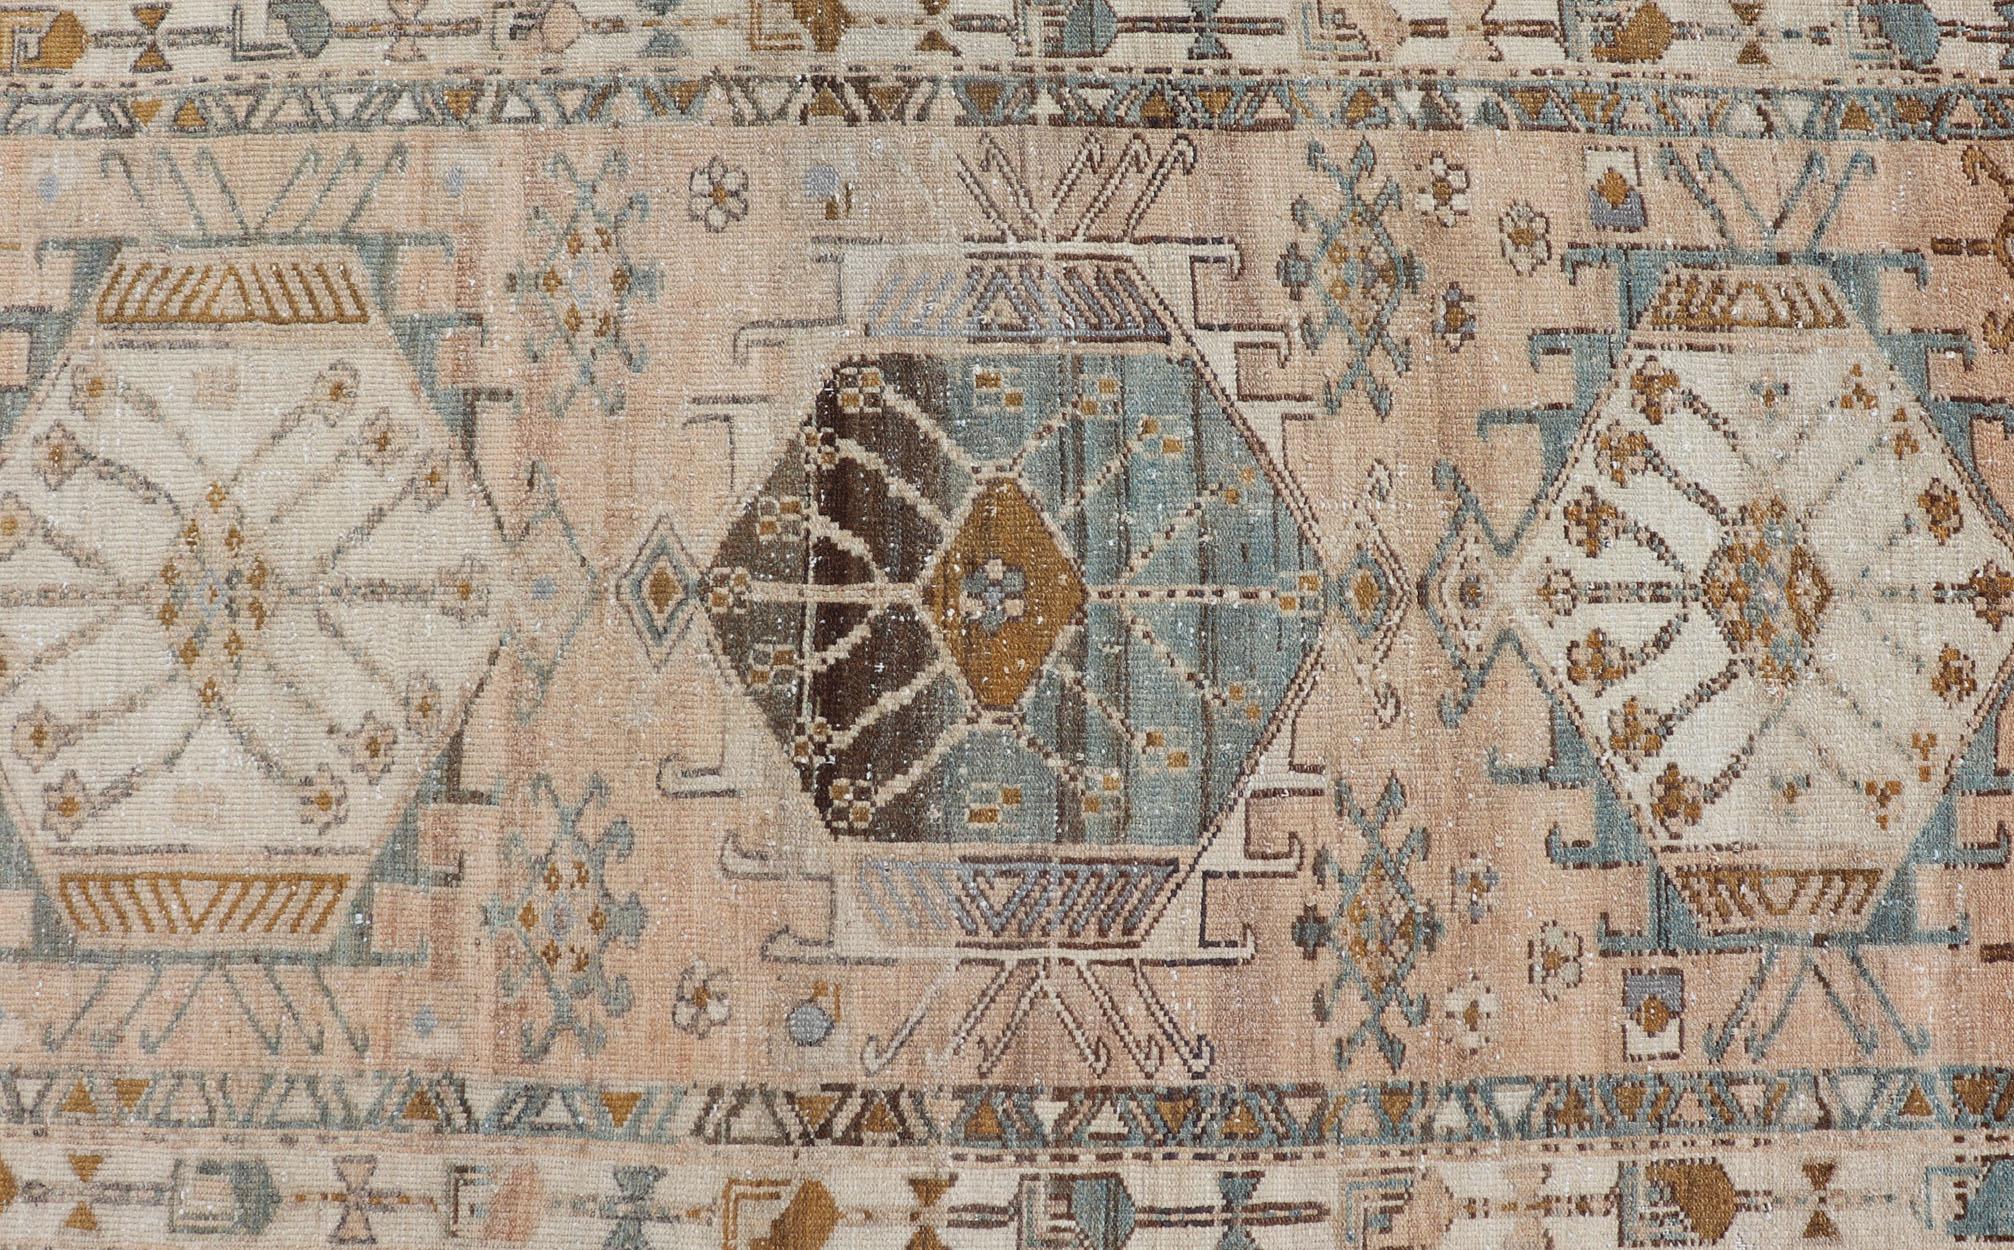 Multi colored antique Persian Heriz Runner with Geometric Medallions. Keivan Woven Arts / rug EMB-9664-P13557, country of origin / type: Iran / Heriz, circa 1920

This Persian Heriz runner carpet from the early-20th century (circa 1920) bears an